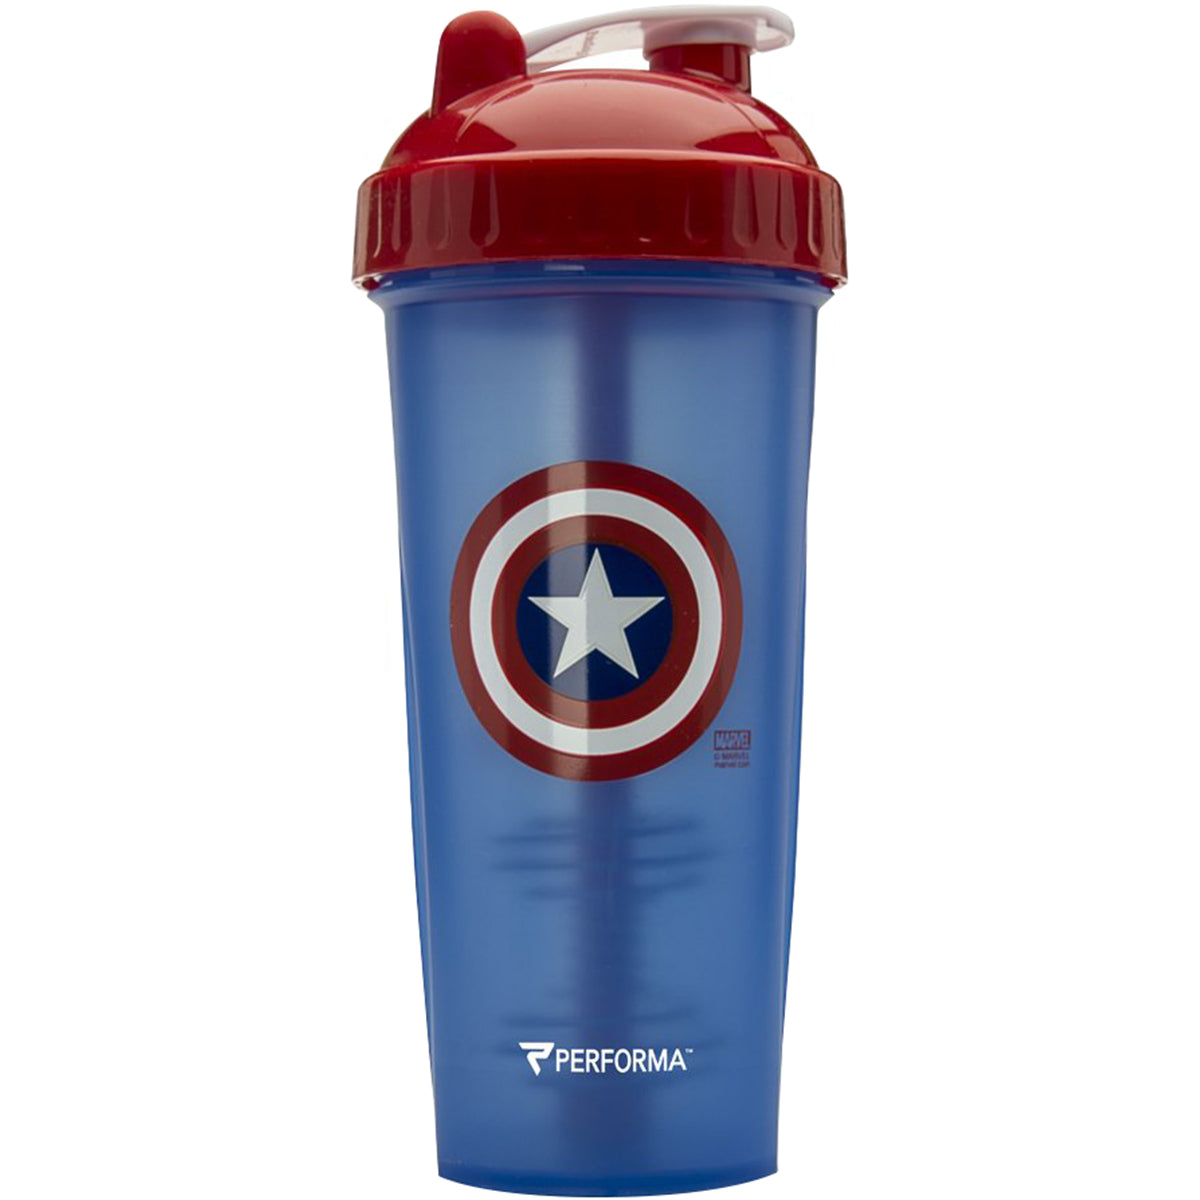 Performa PerfectShaker Avengers Infinity War Shaker Cup Bottle - Captain America PerfectShaker